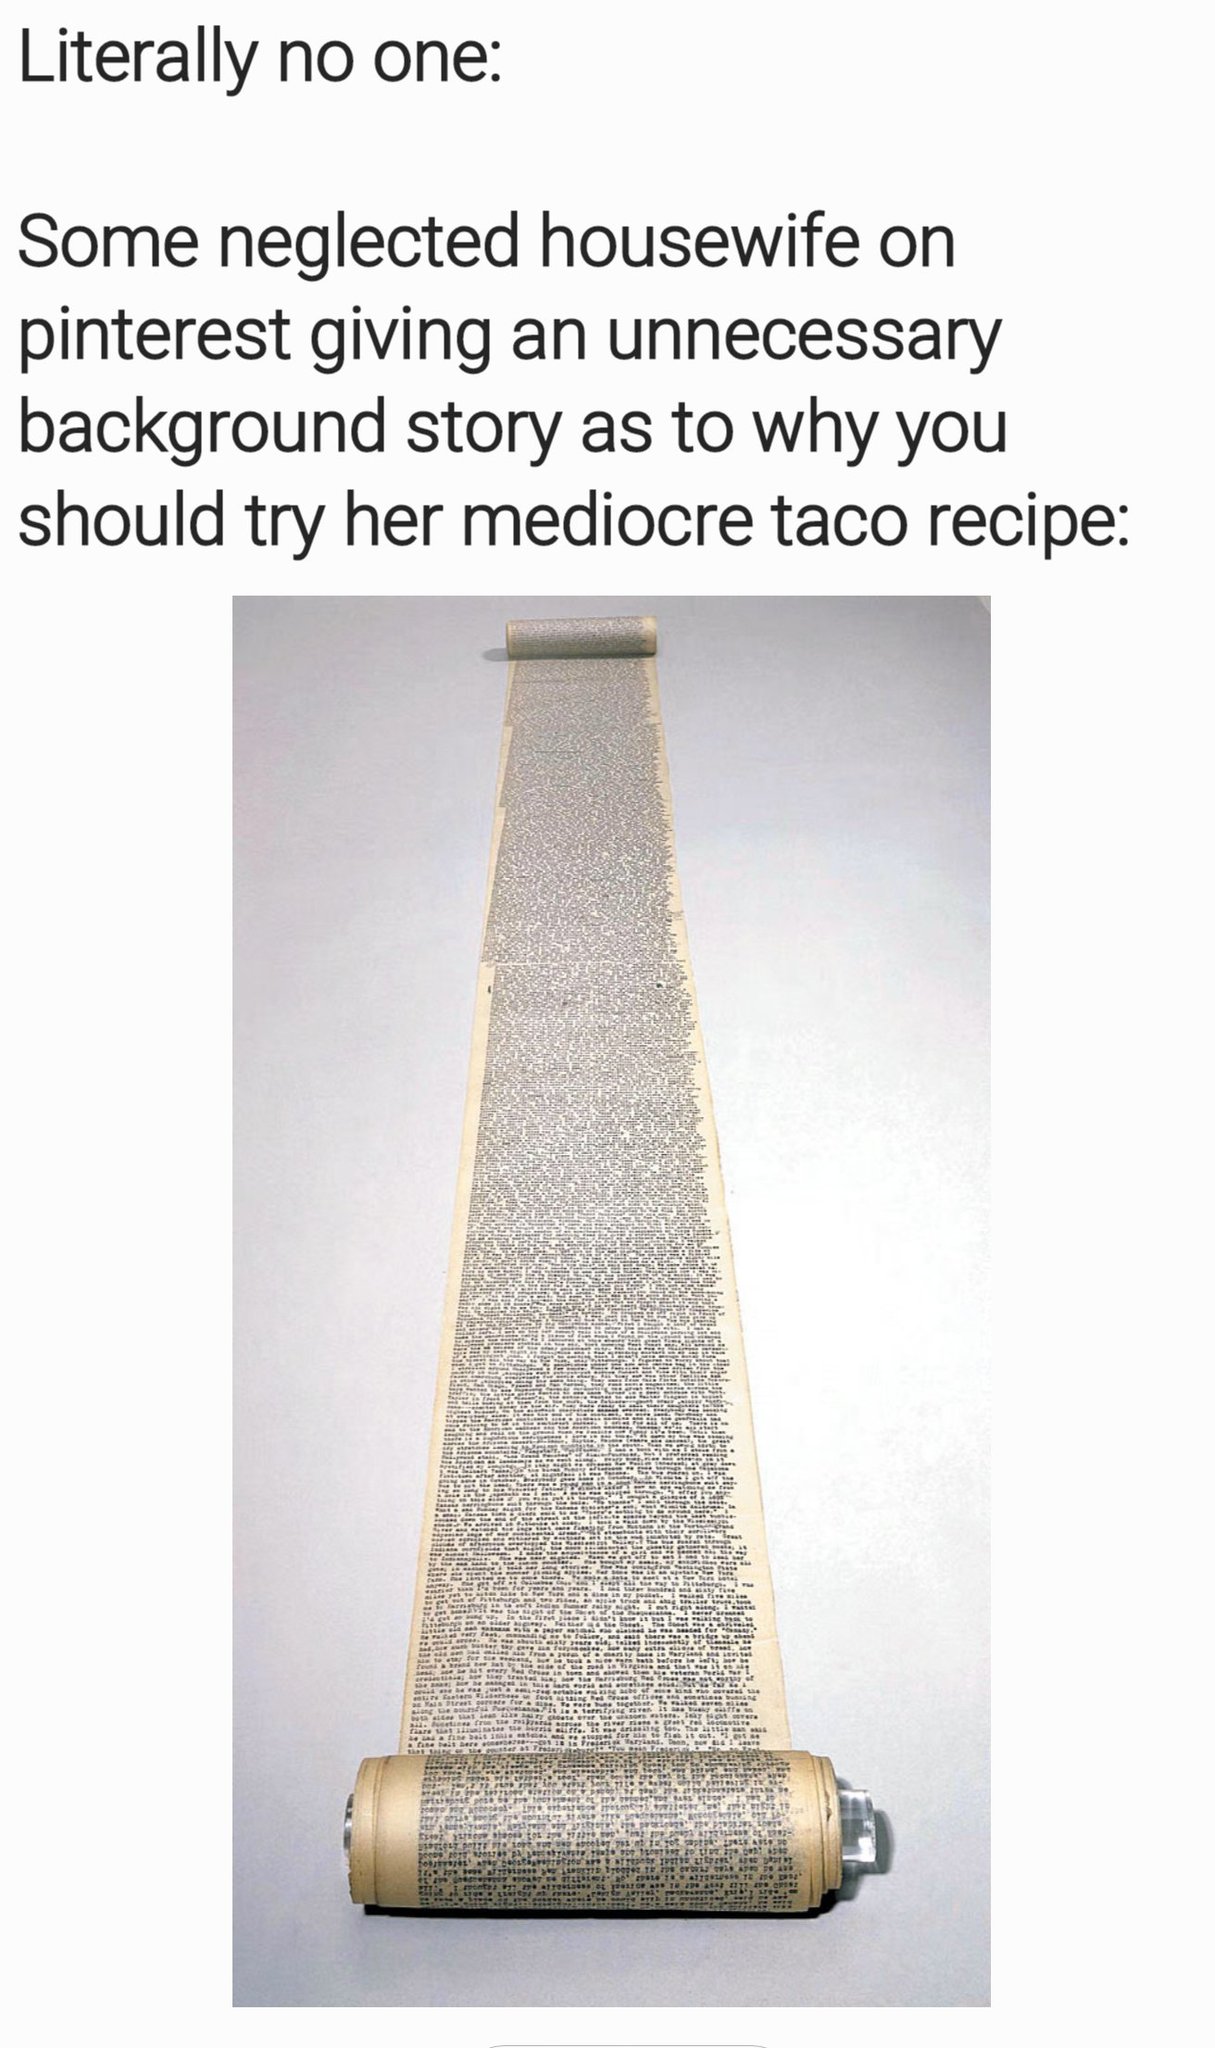 Just put the recipe on top! - meme